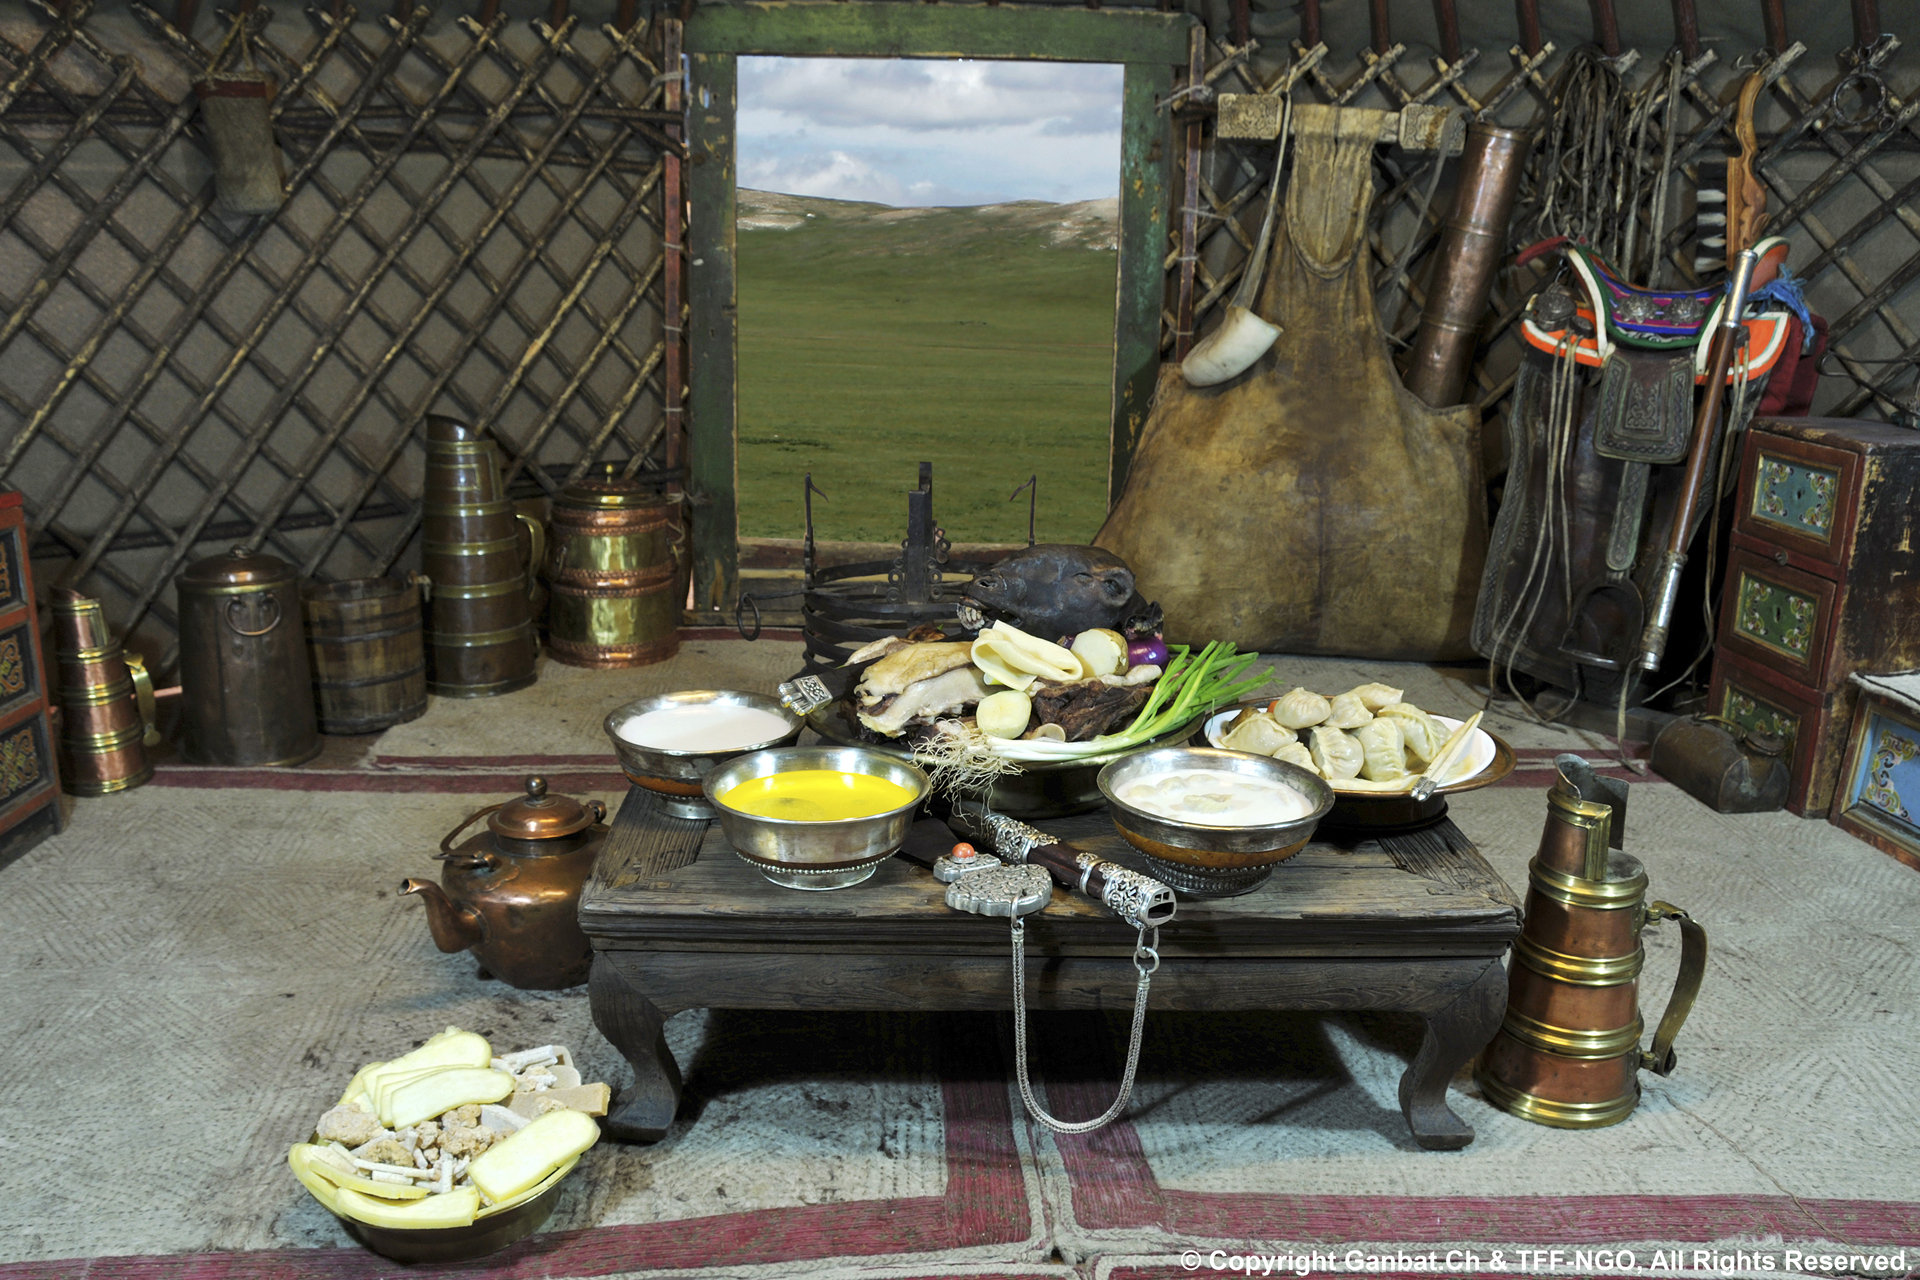 ancient mongolian food